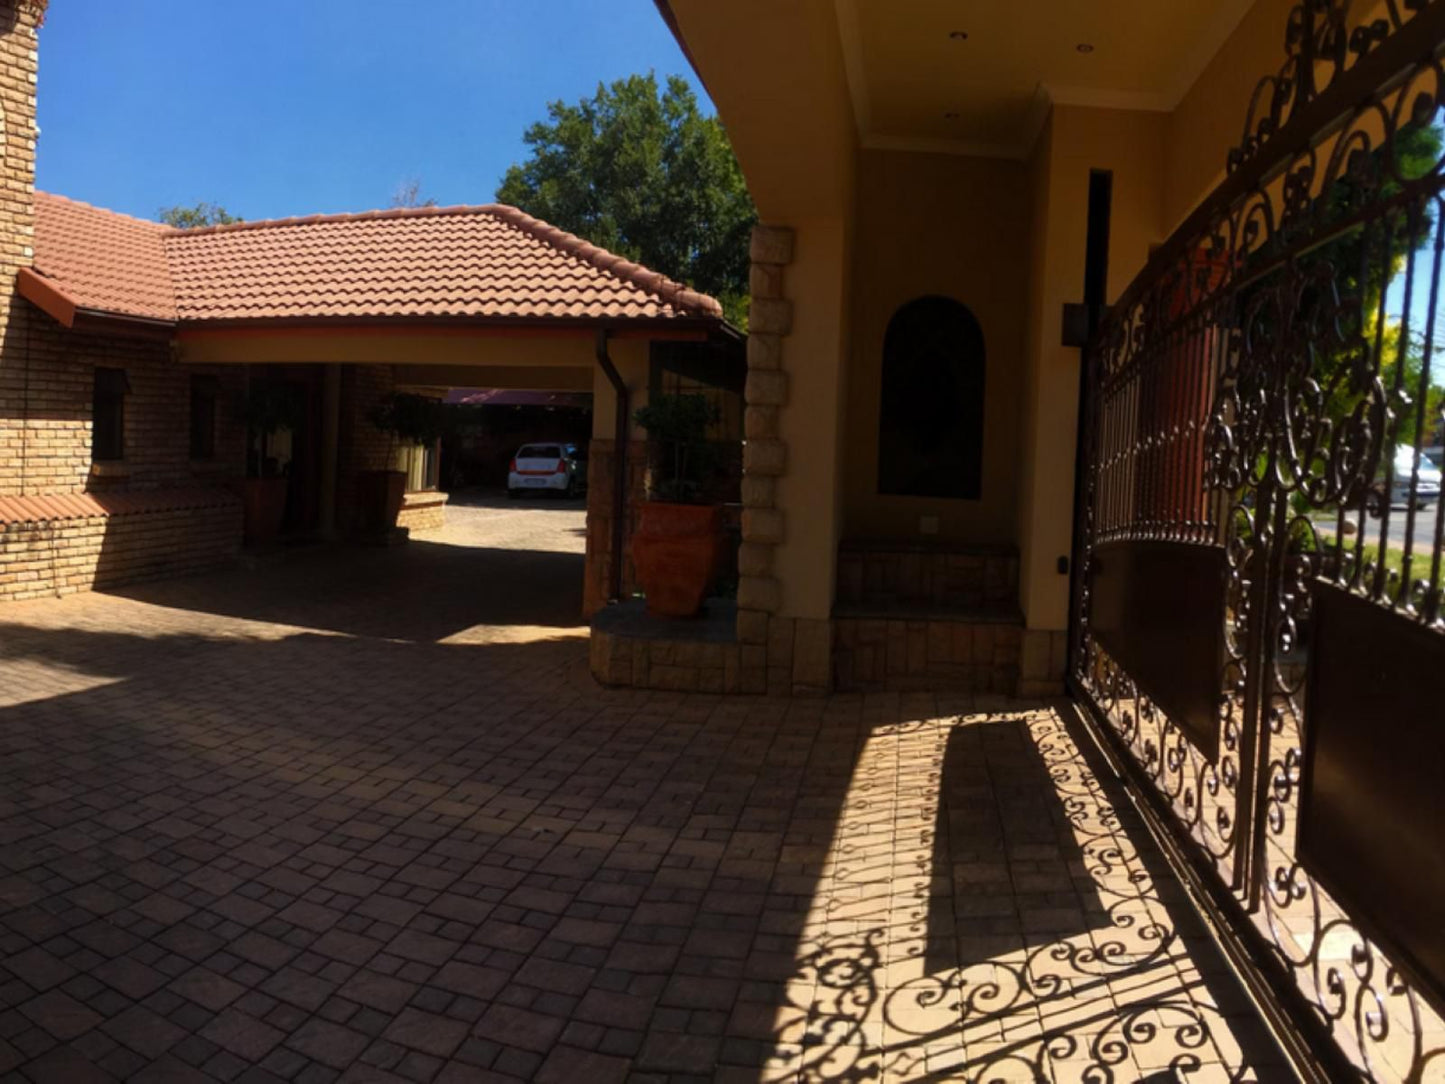 Le Cozmo Guest House Alberton Johannesburg Gauteng South Africa 